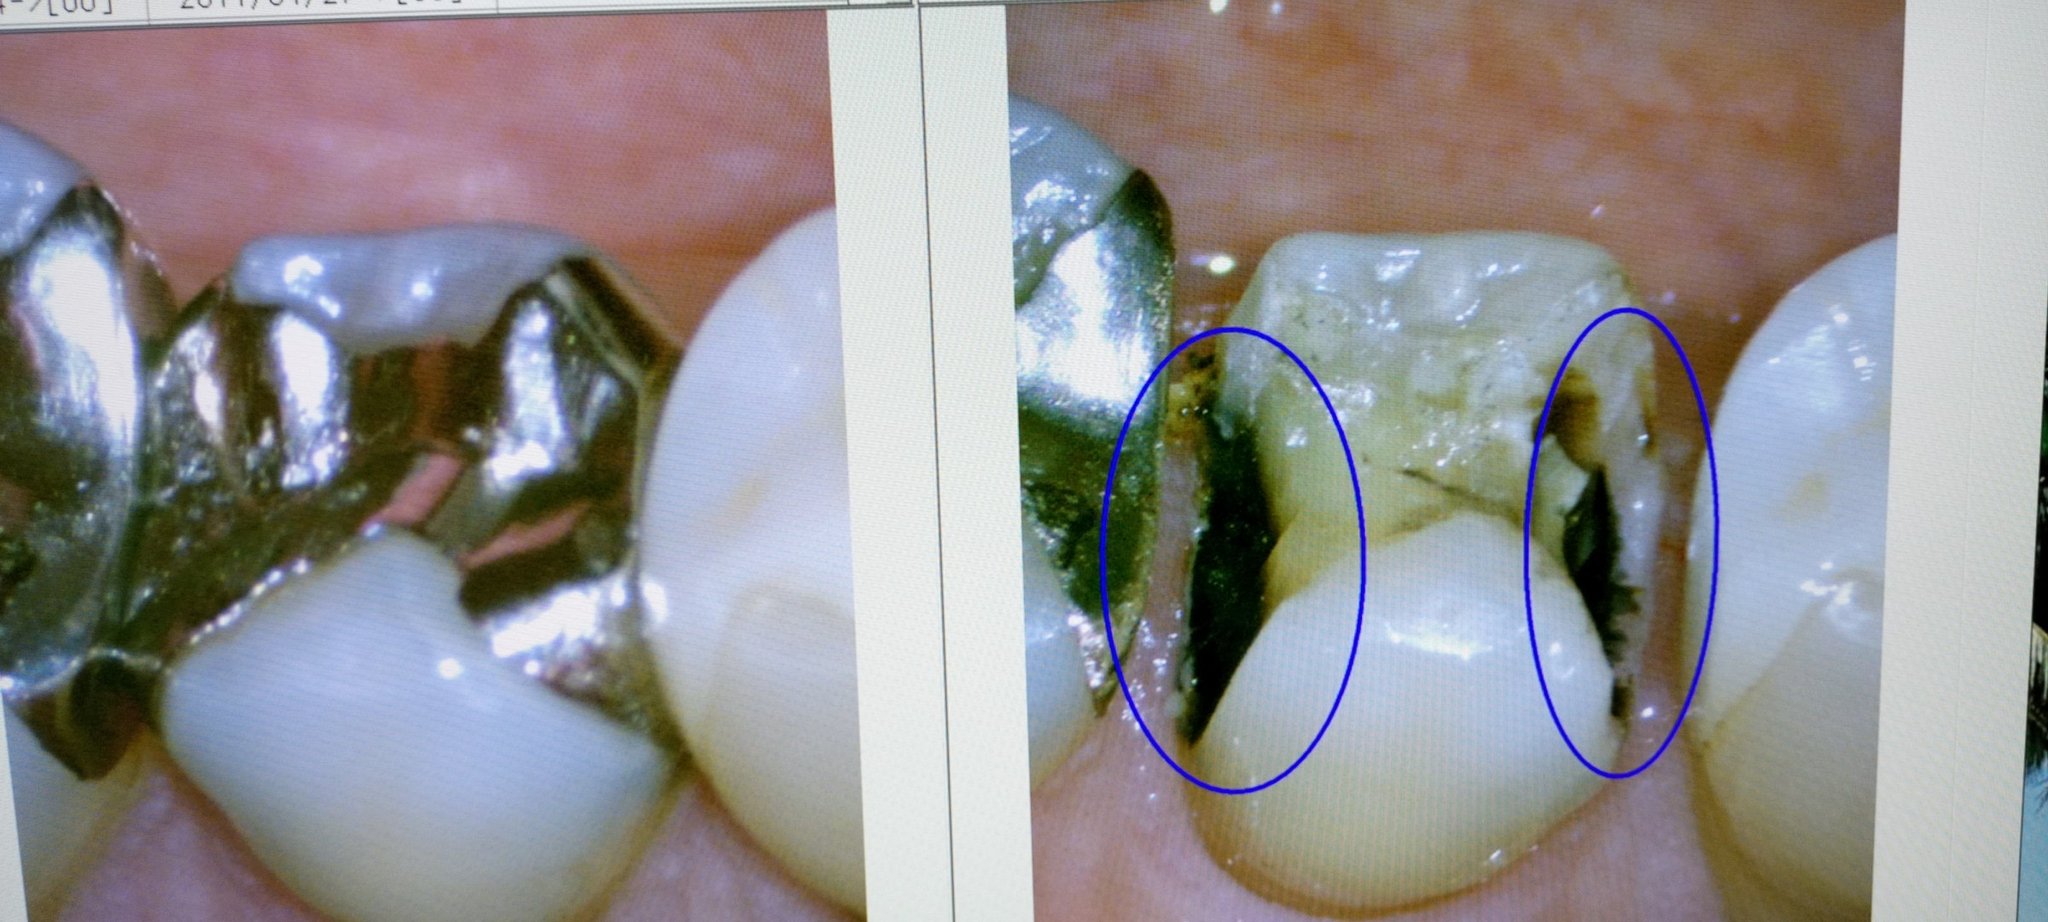 Q. 何故保険治療の銀歯は、虫歯ができるのですか？